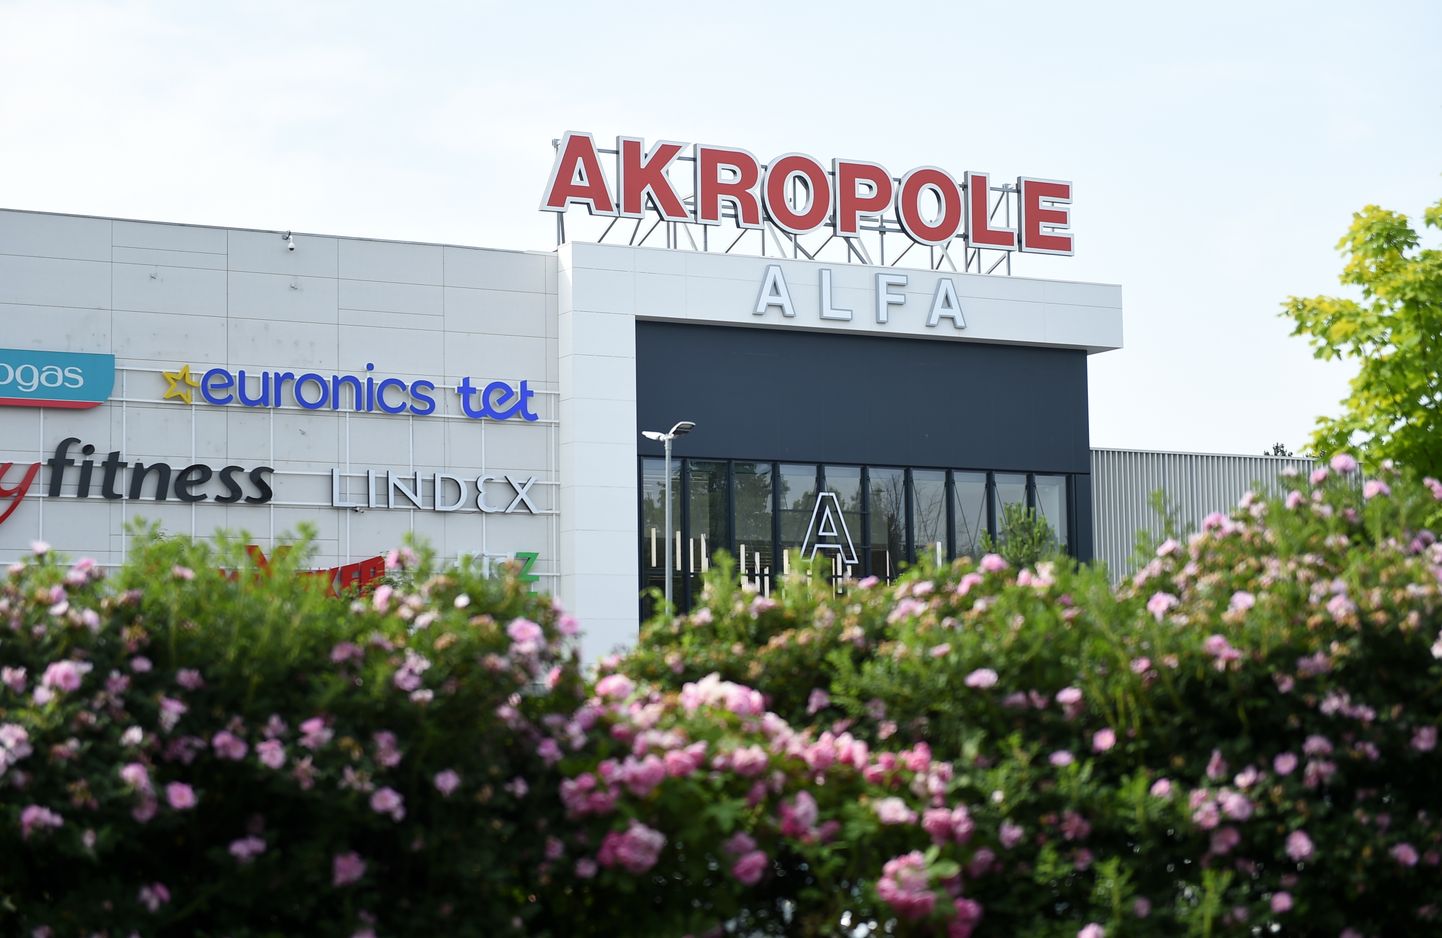 Iepirkšanās centrs "Akropole Alfa".